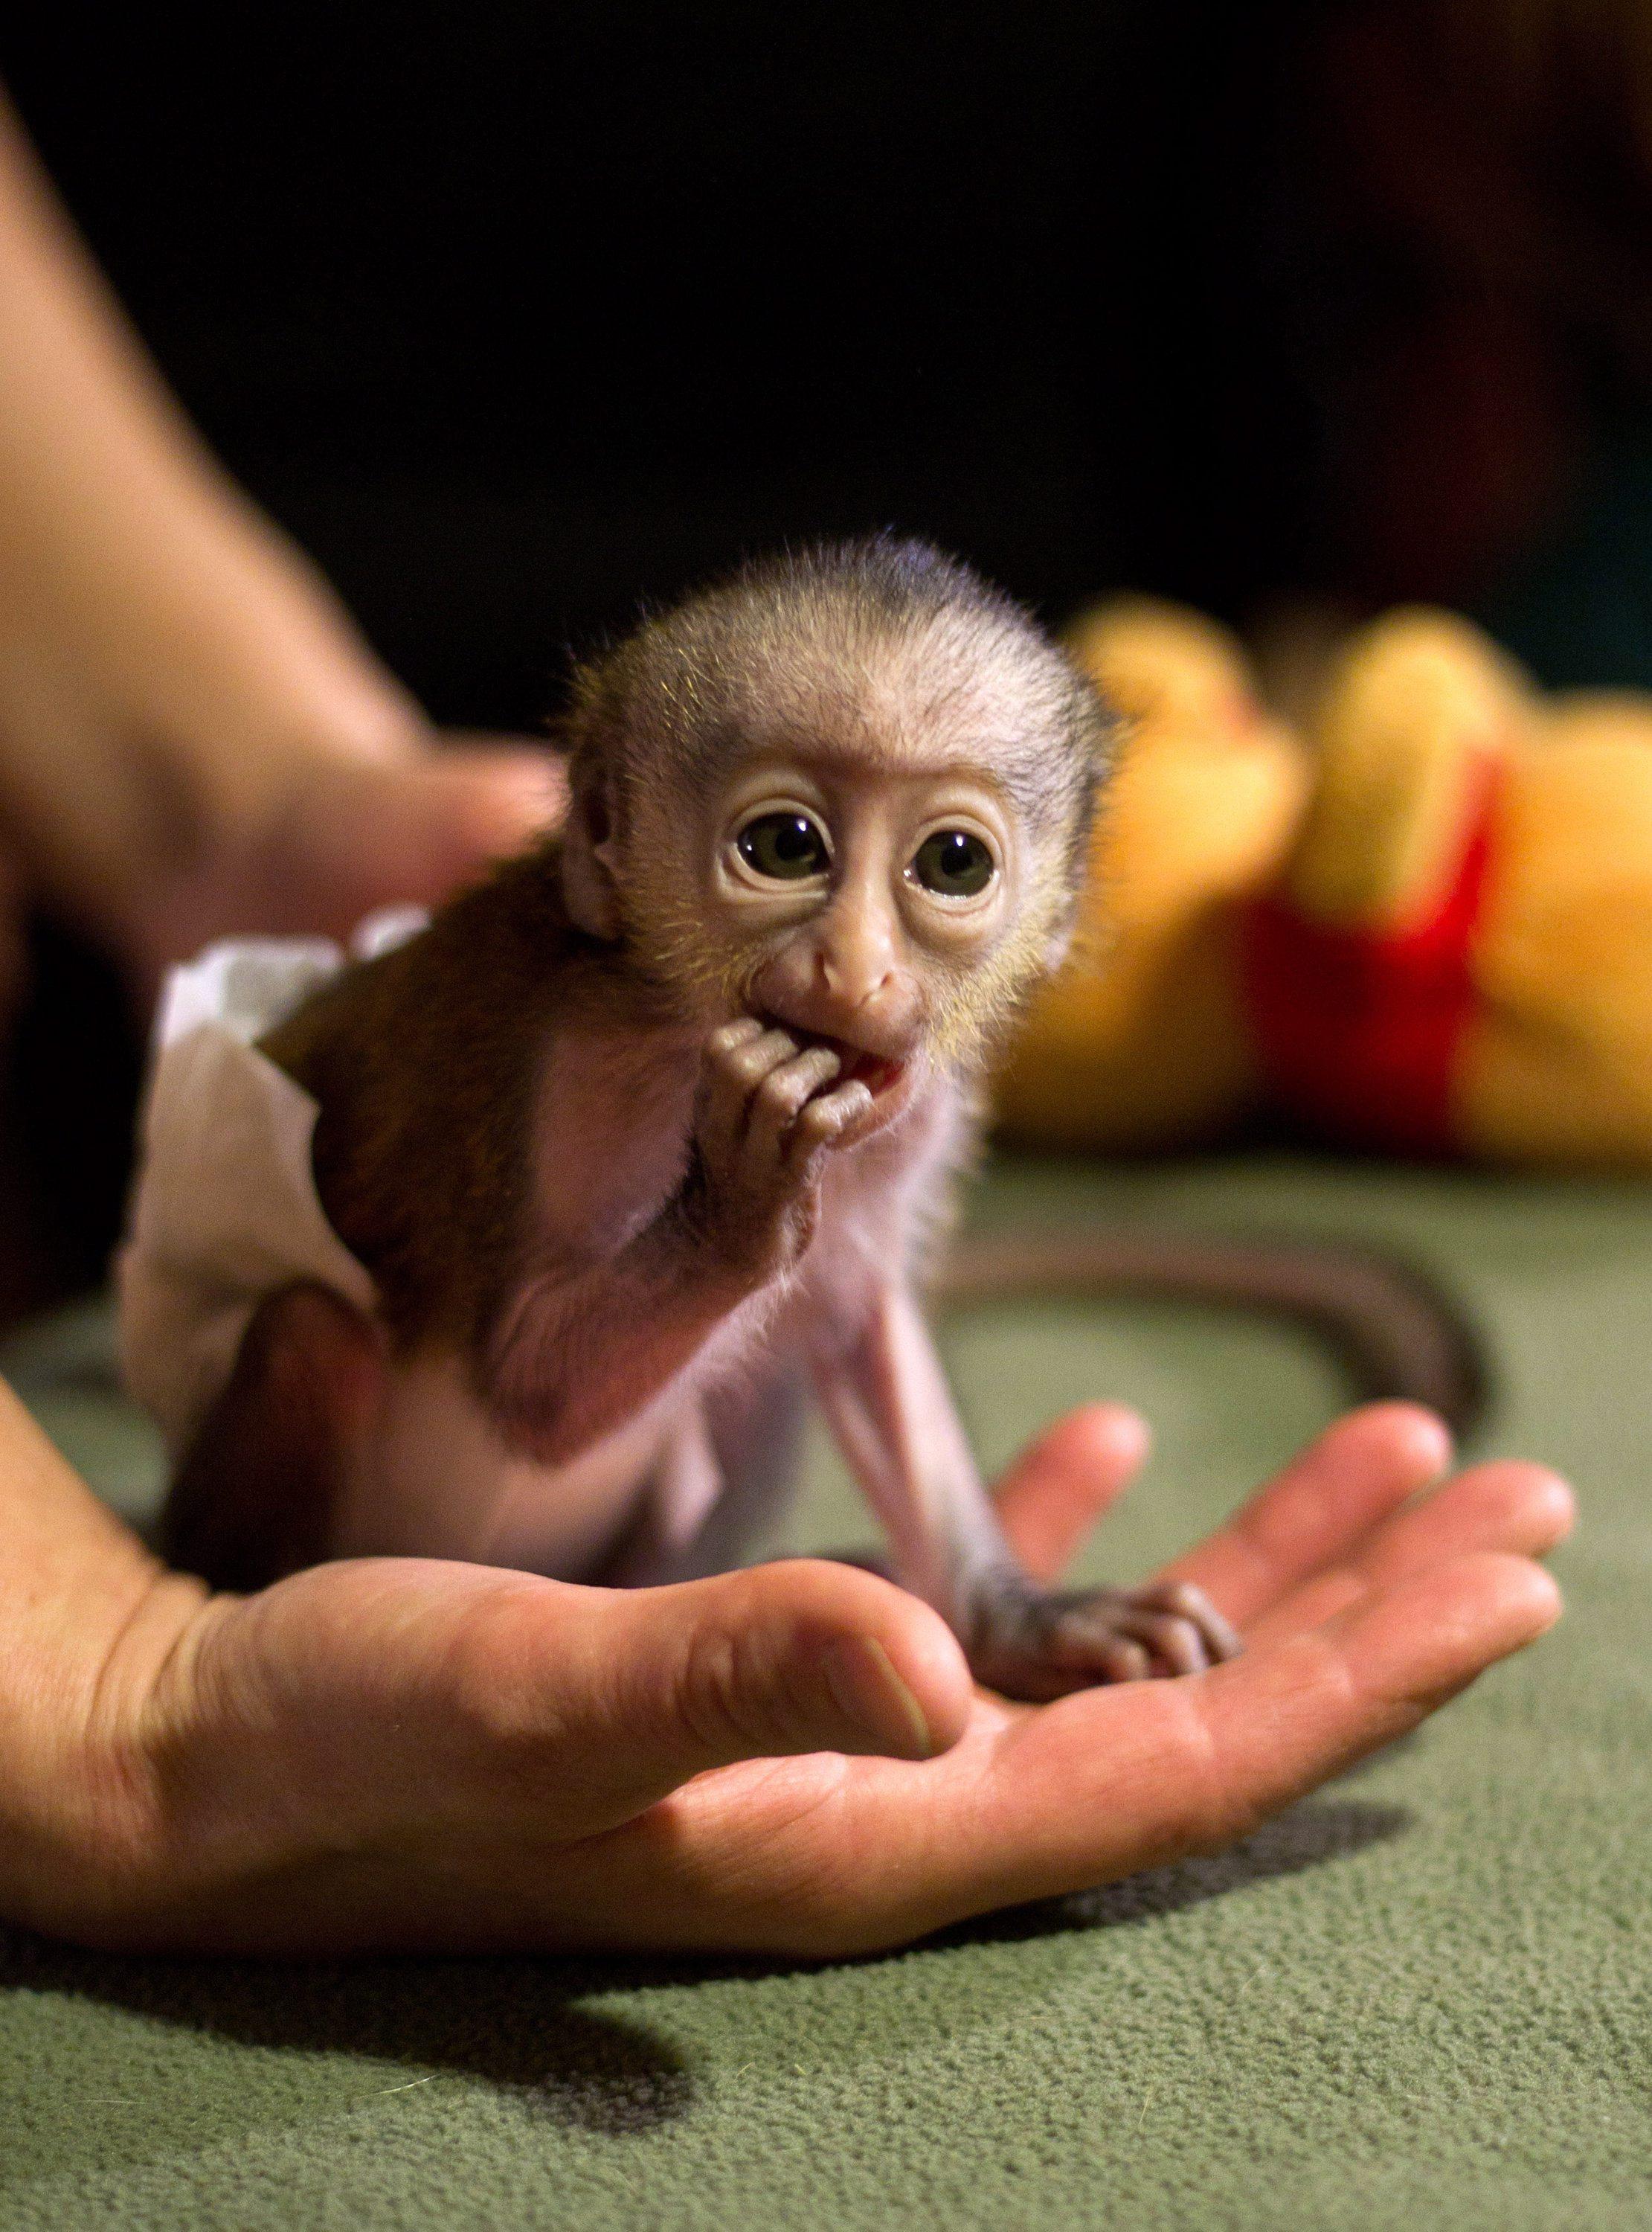 Small monkey. Маленькая обезьянка капуцин. Карликовая игрунка. Карликовый капуцин. Маленькие домашние обезьянки.